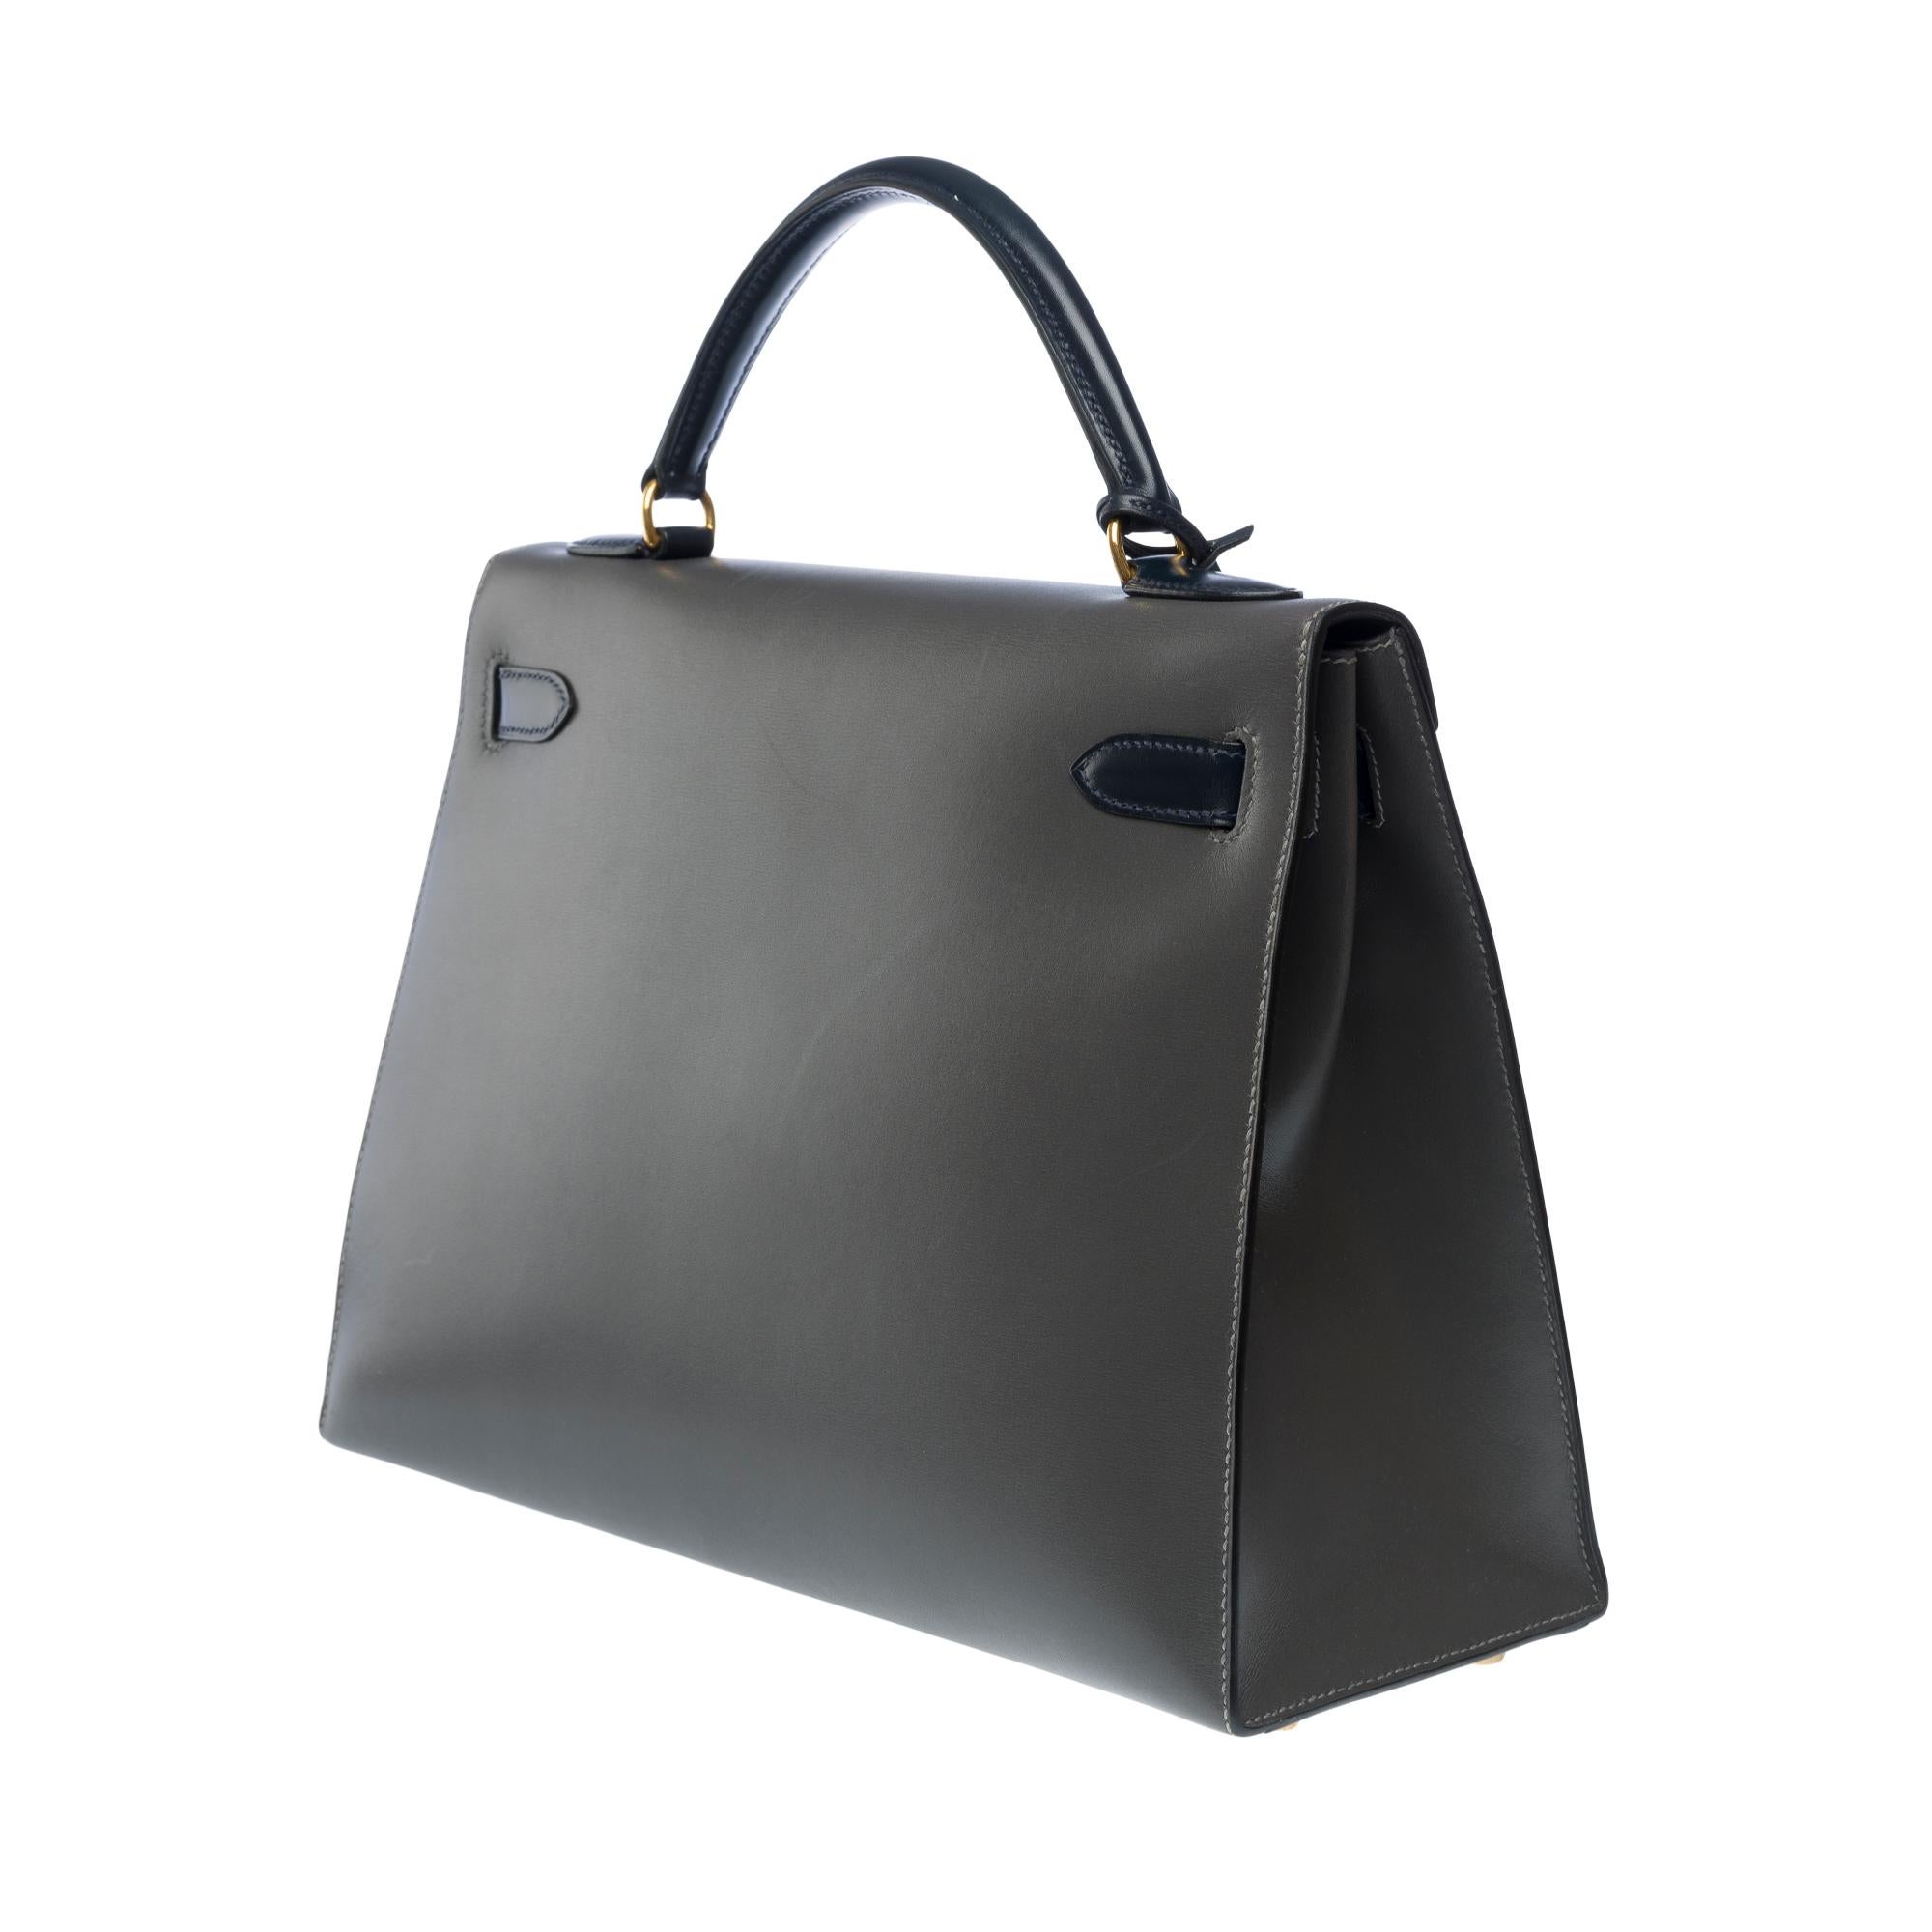 Rare Hermès Kelly 32 sellier handbag strap in Navy & Black calfskin leather, GHW 1